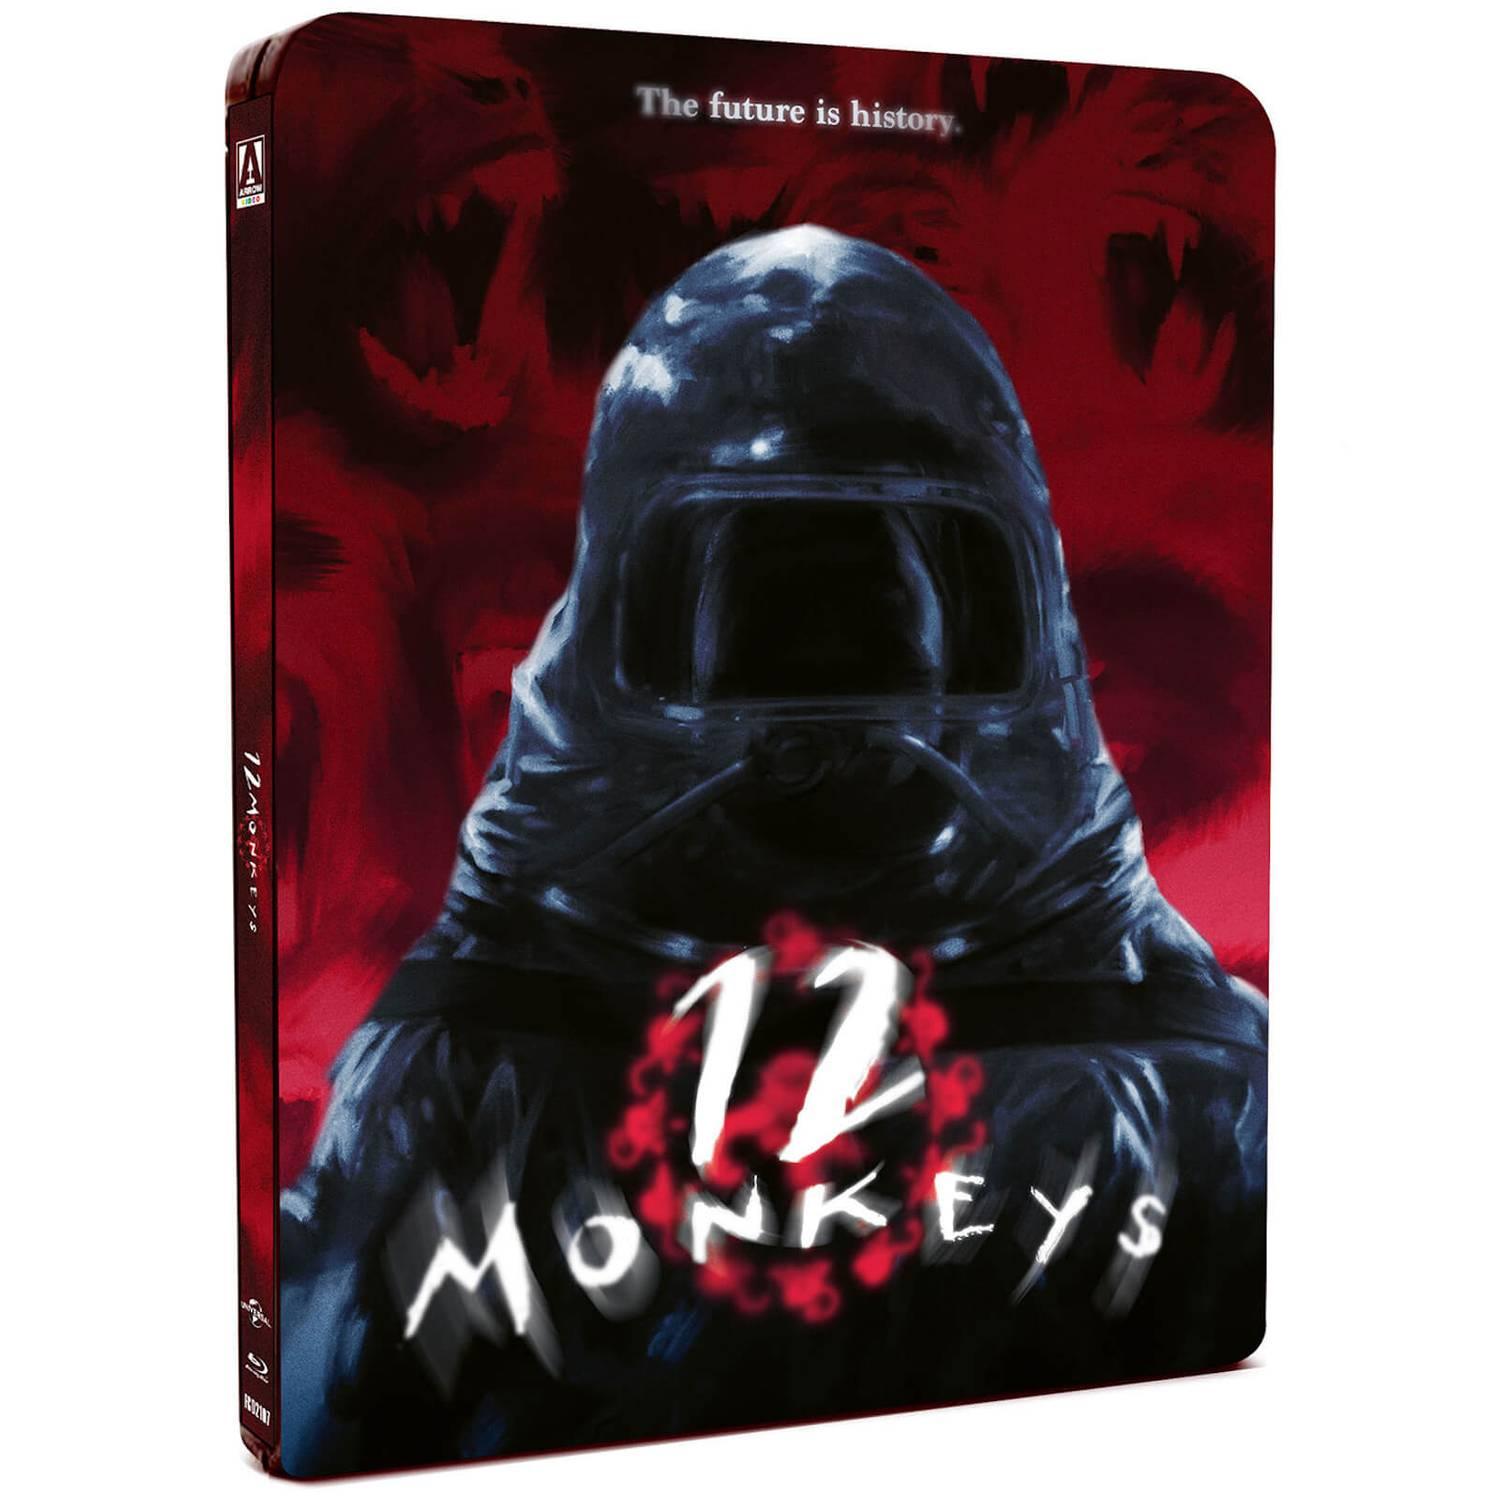 12 обезьян (1995) (англ. яз.) (Blu-ray) Steelbook